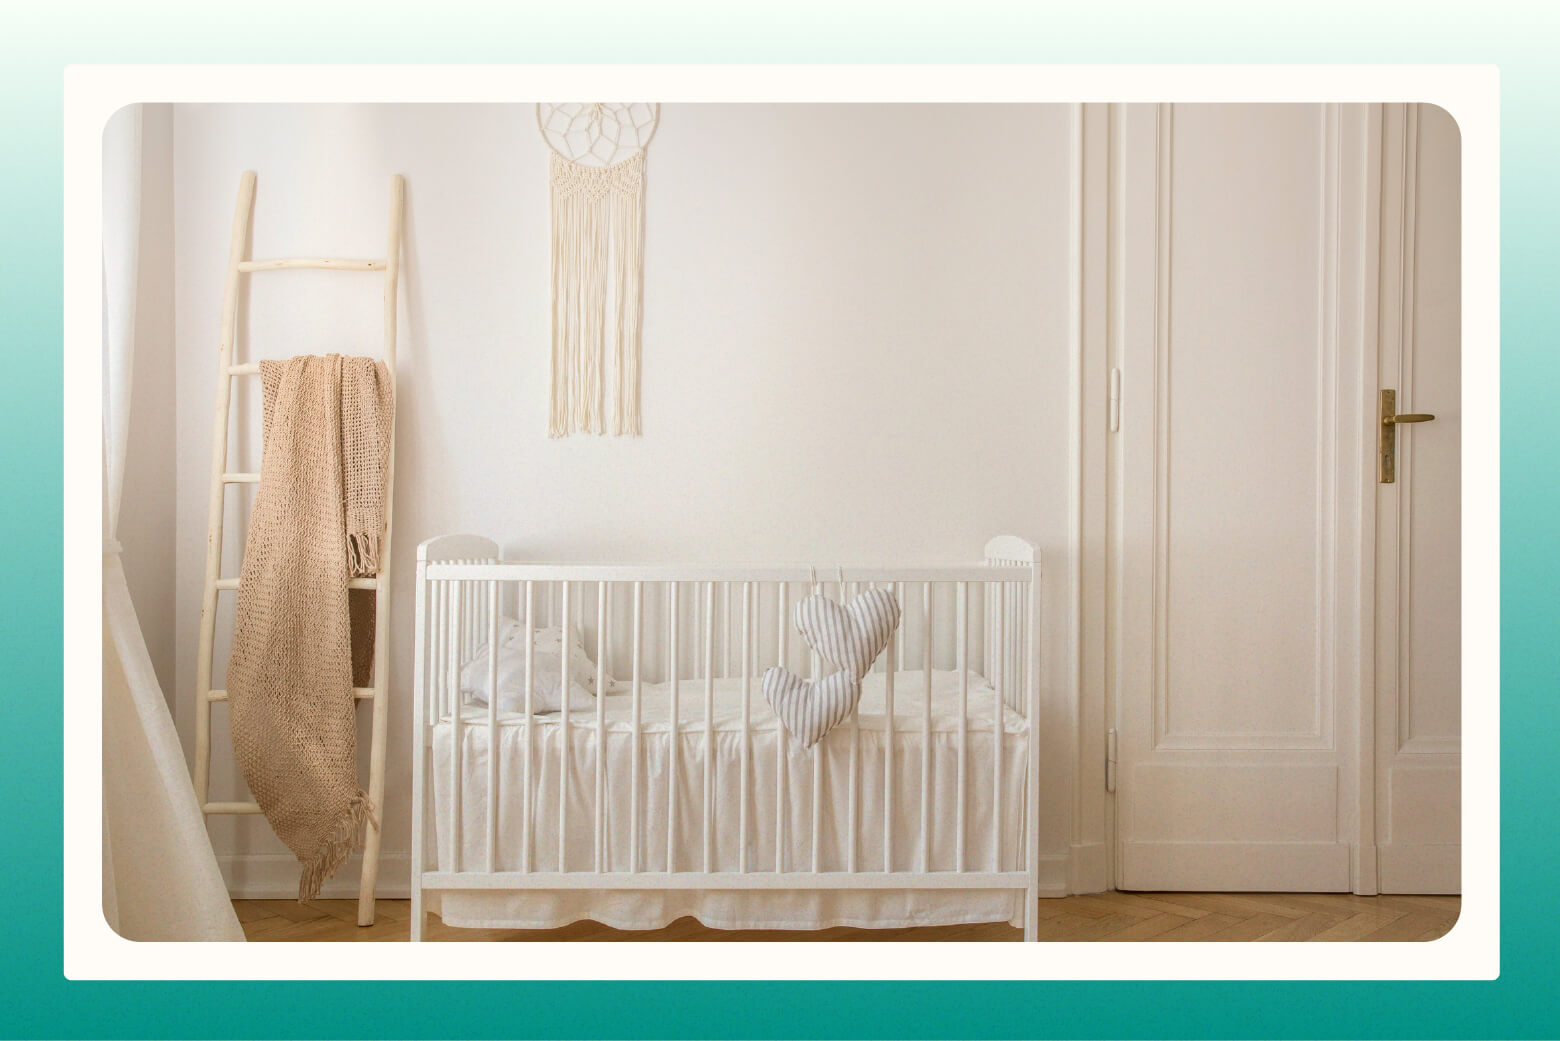 Neutral-toned baby's nursery 